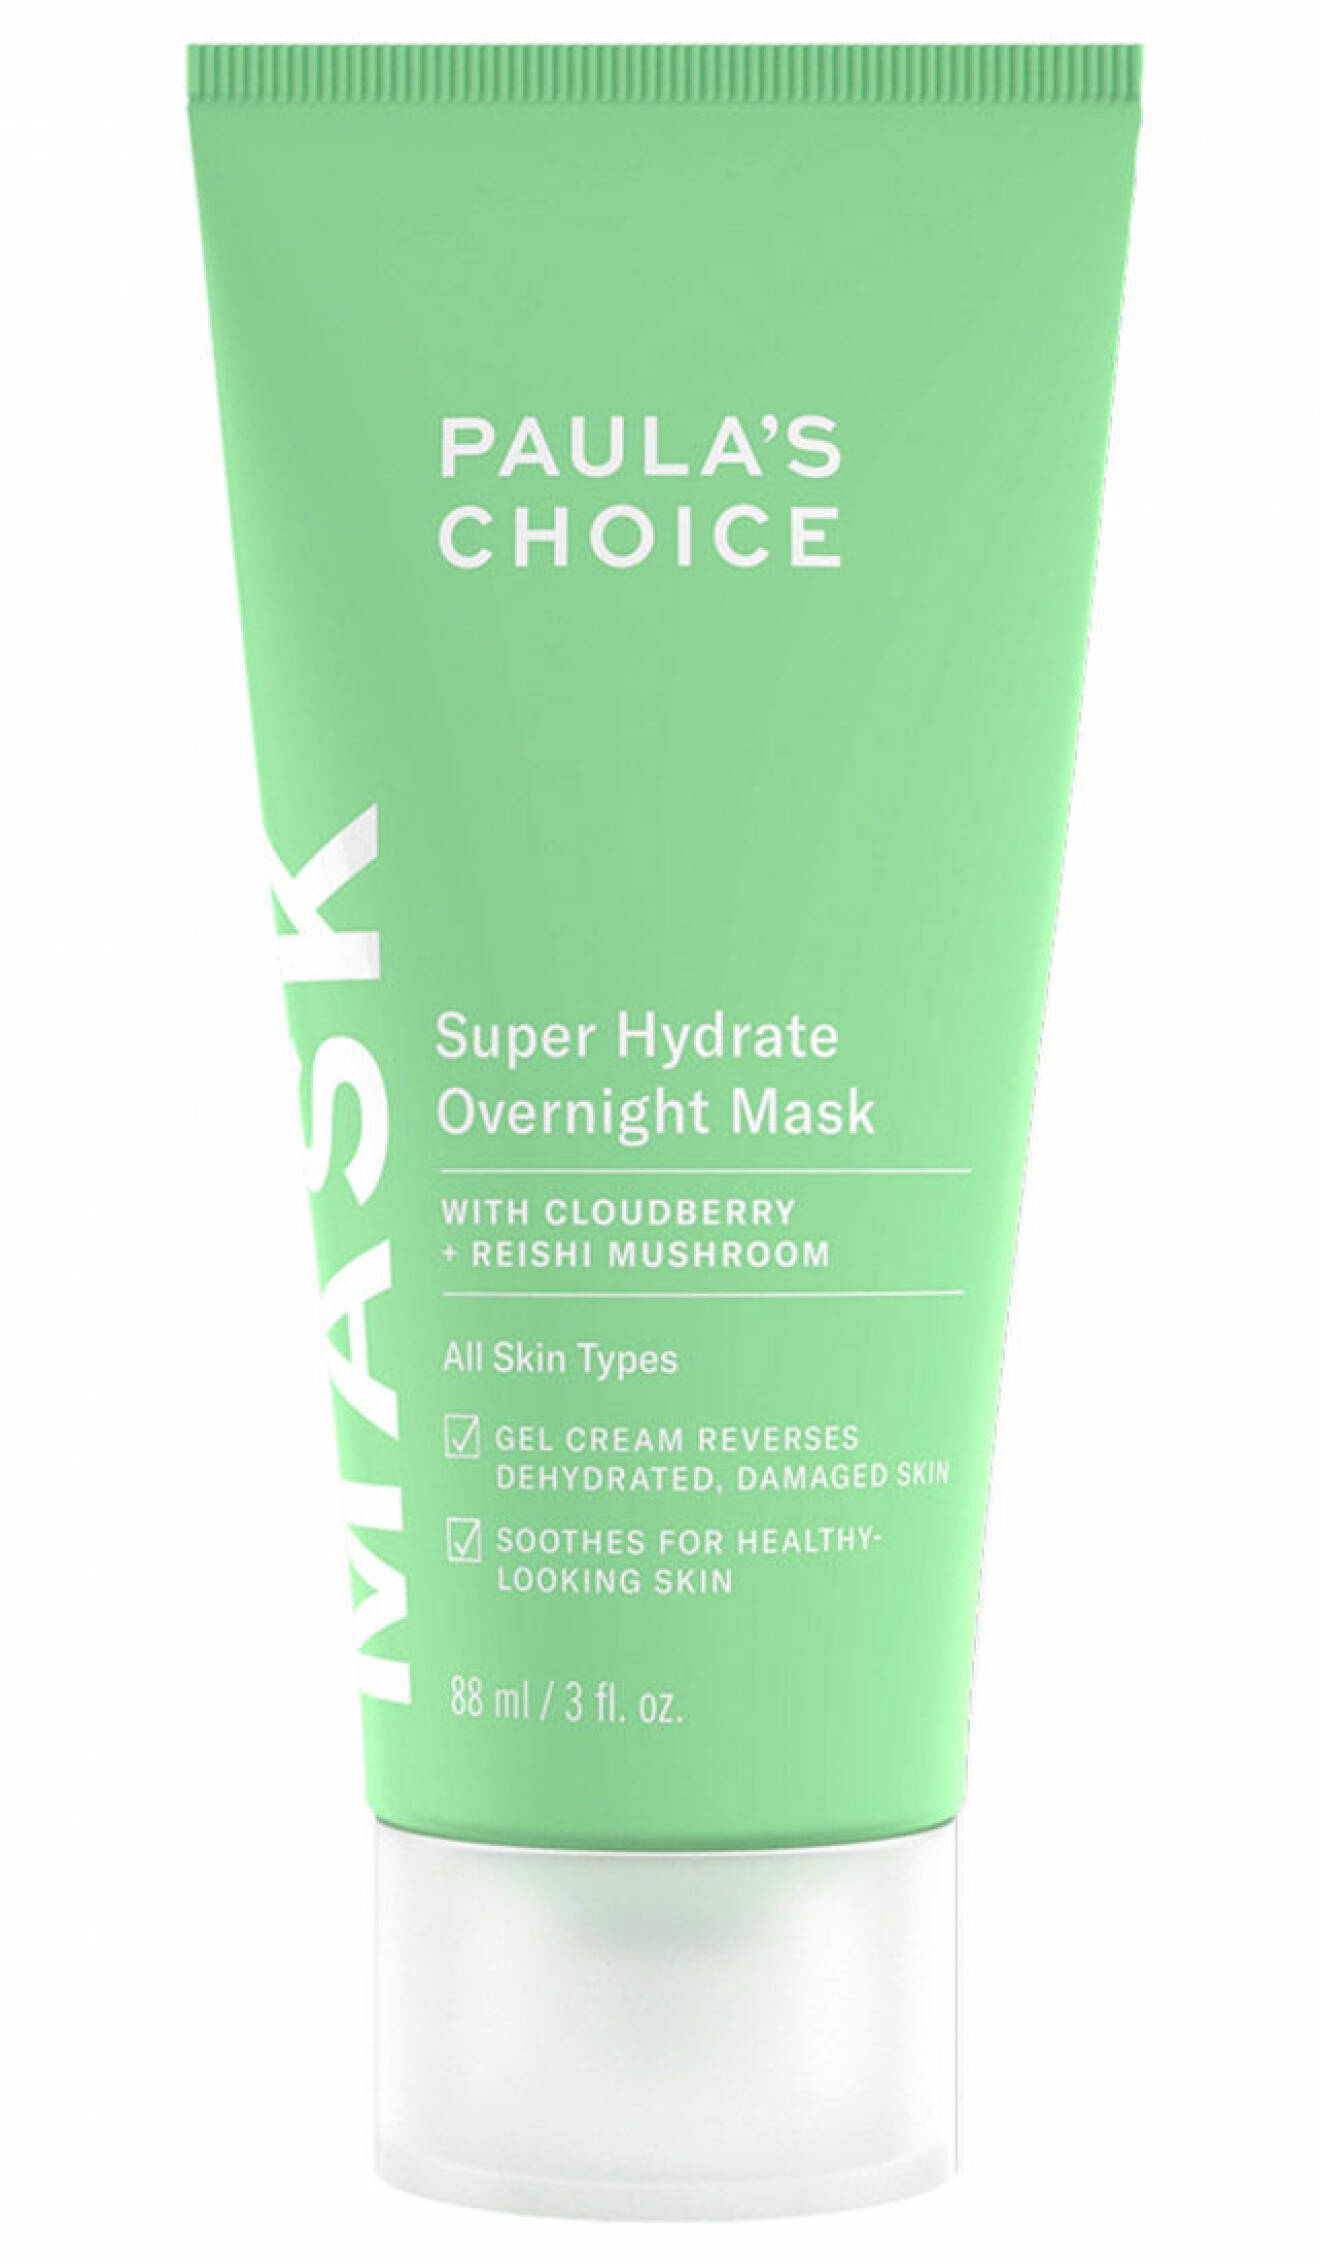 Paulas Choice Super hydrate overnight mask.